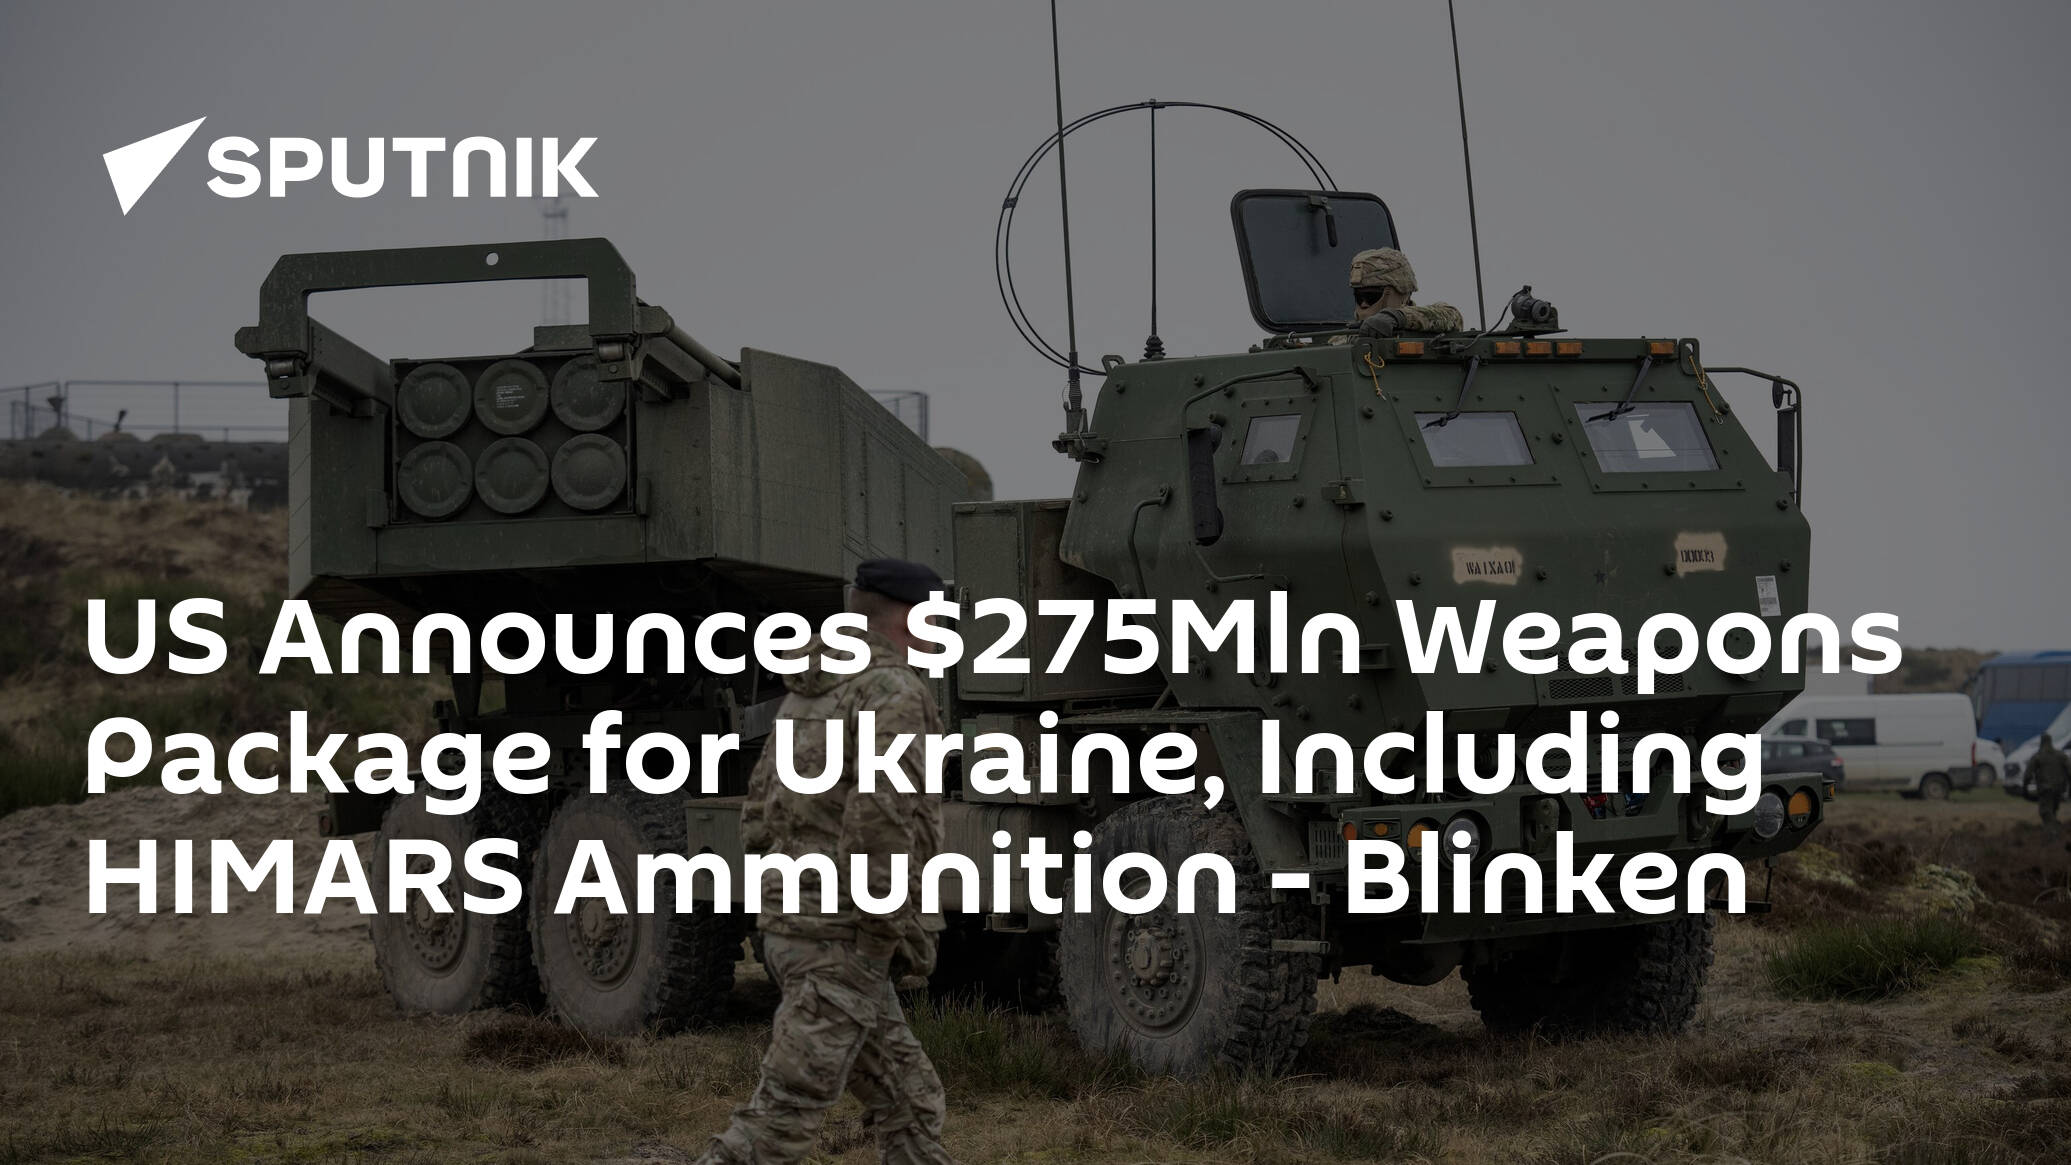 US Announces 275Mln Weapons Package for Ukraine Including HIMARS Ammunition